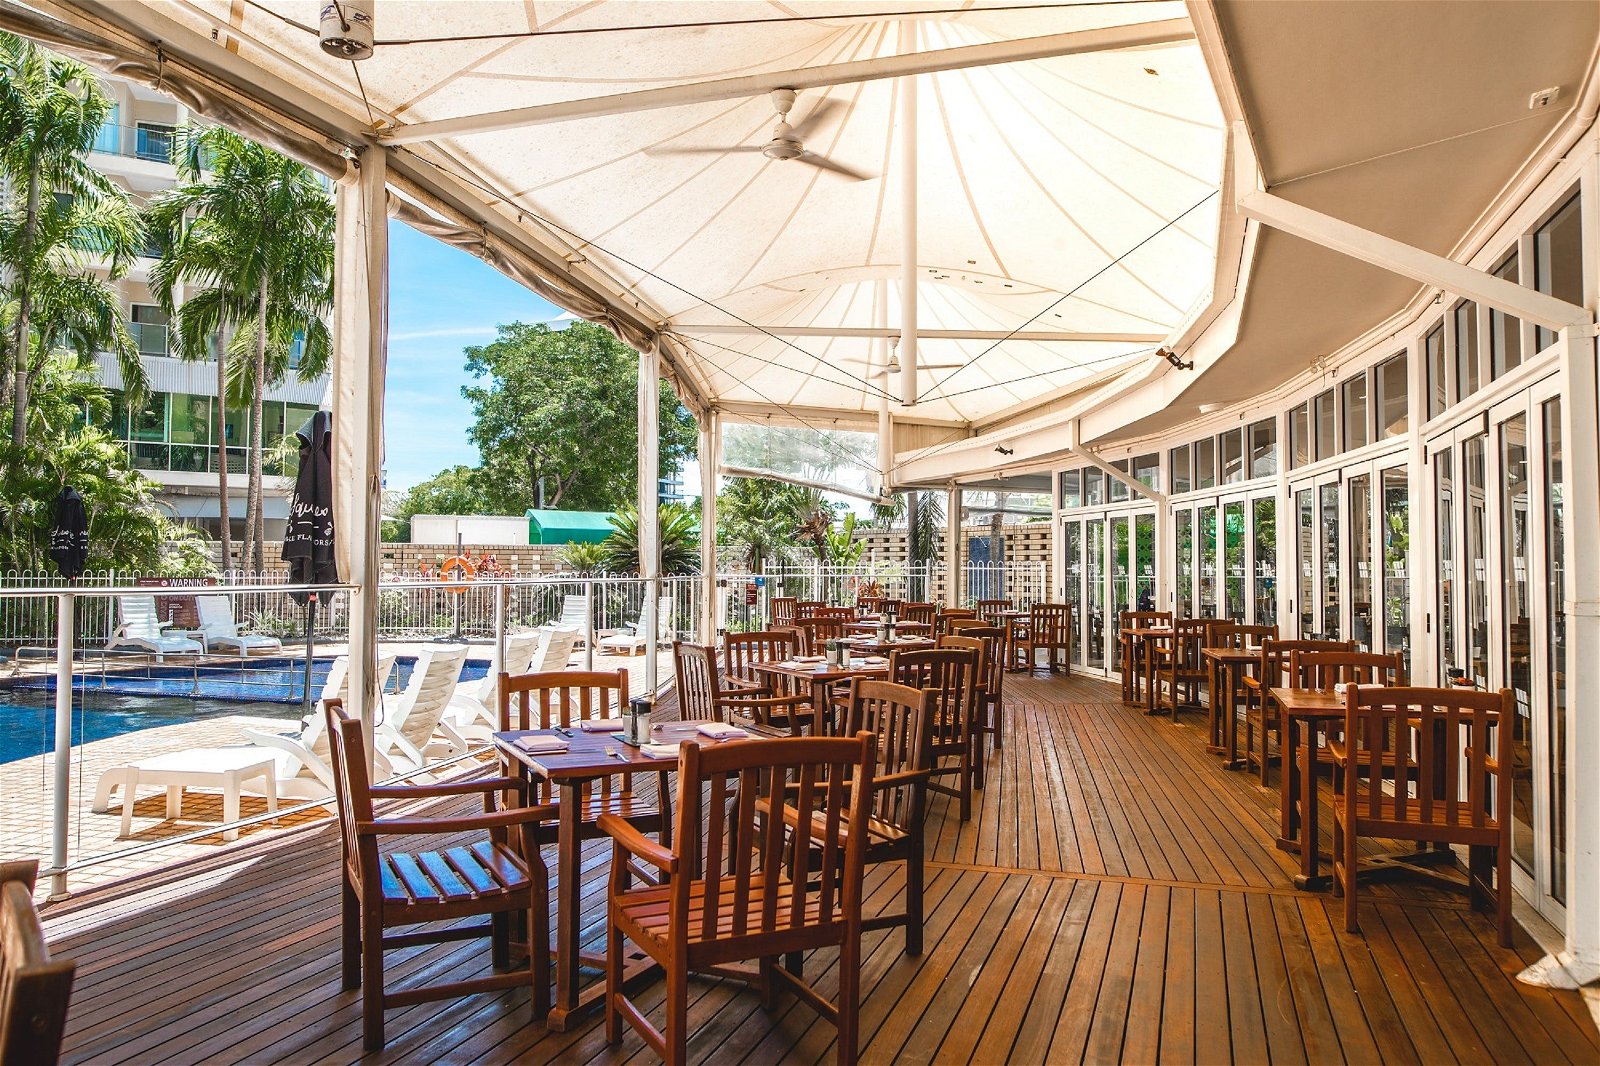 Poolside Restaurant and Bar